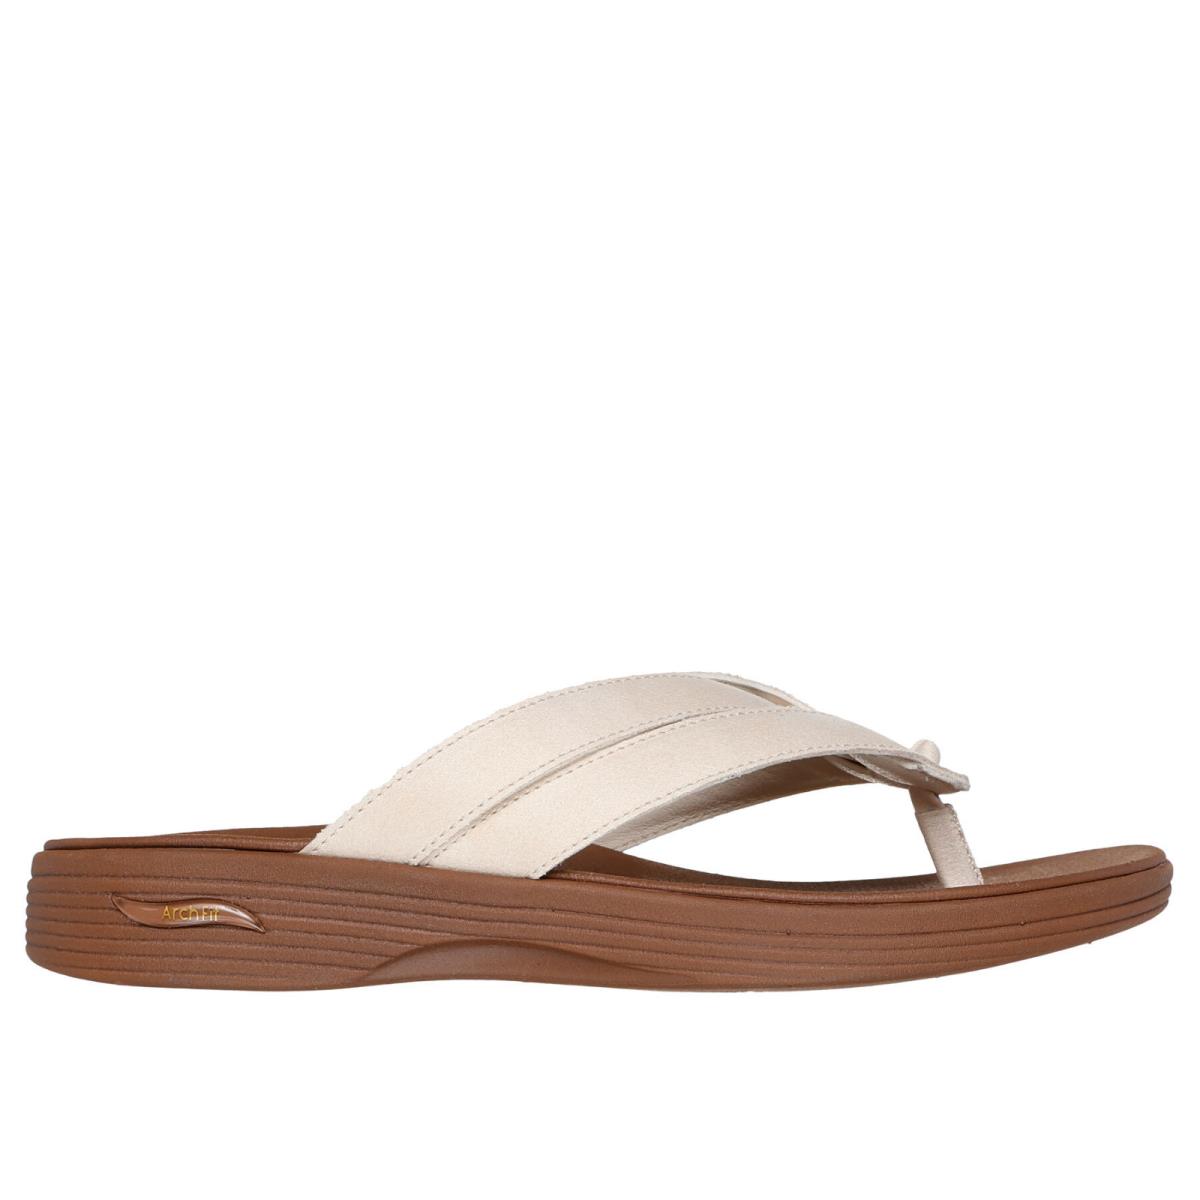 Womens Skechers Arch Fit Maui-playa Off White Comfort Sandals Shoes Medium/Regular